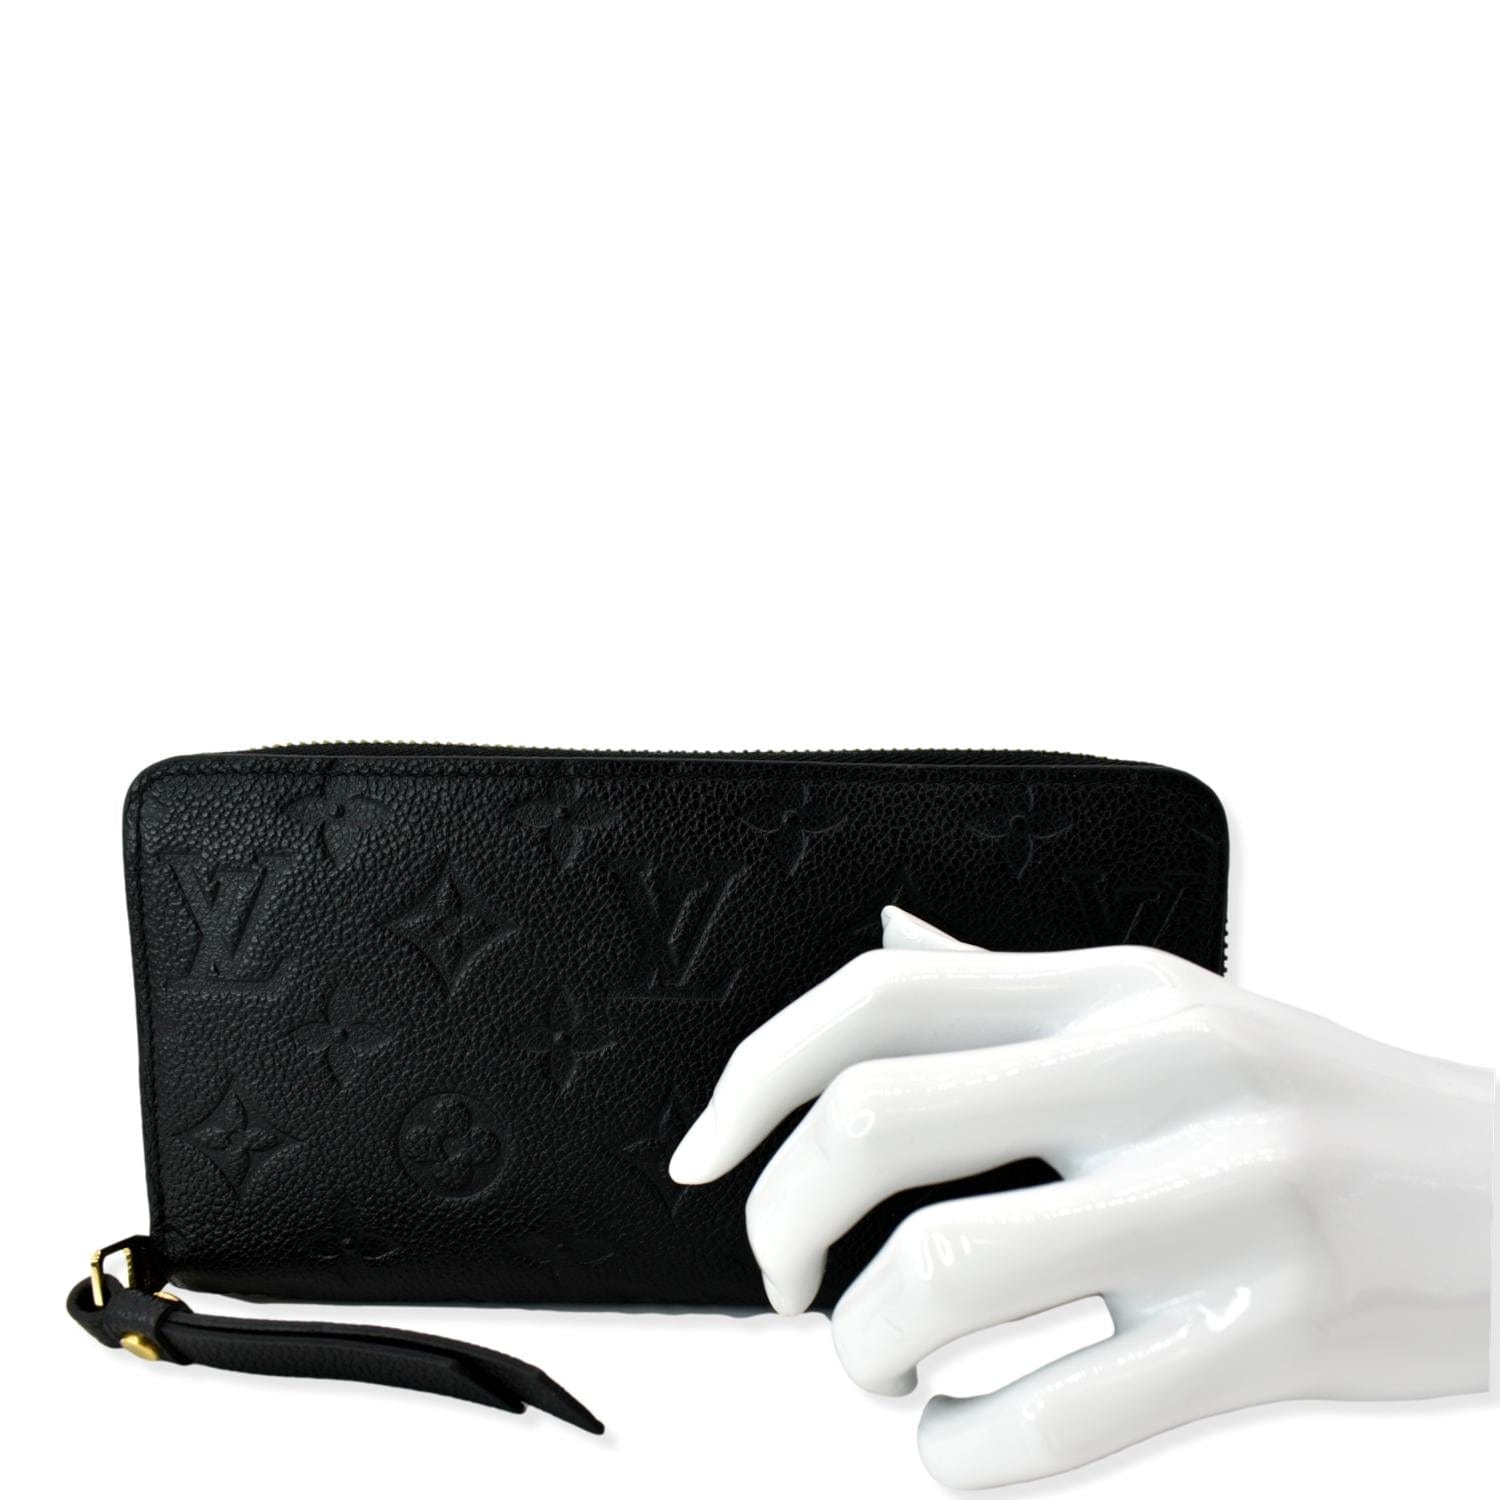 Louis Vuitton - Zippy Wallet - Monogram Leather - Black - Women - Luxury